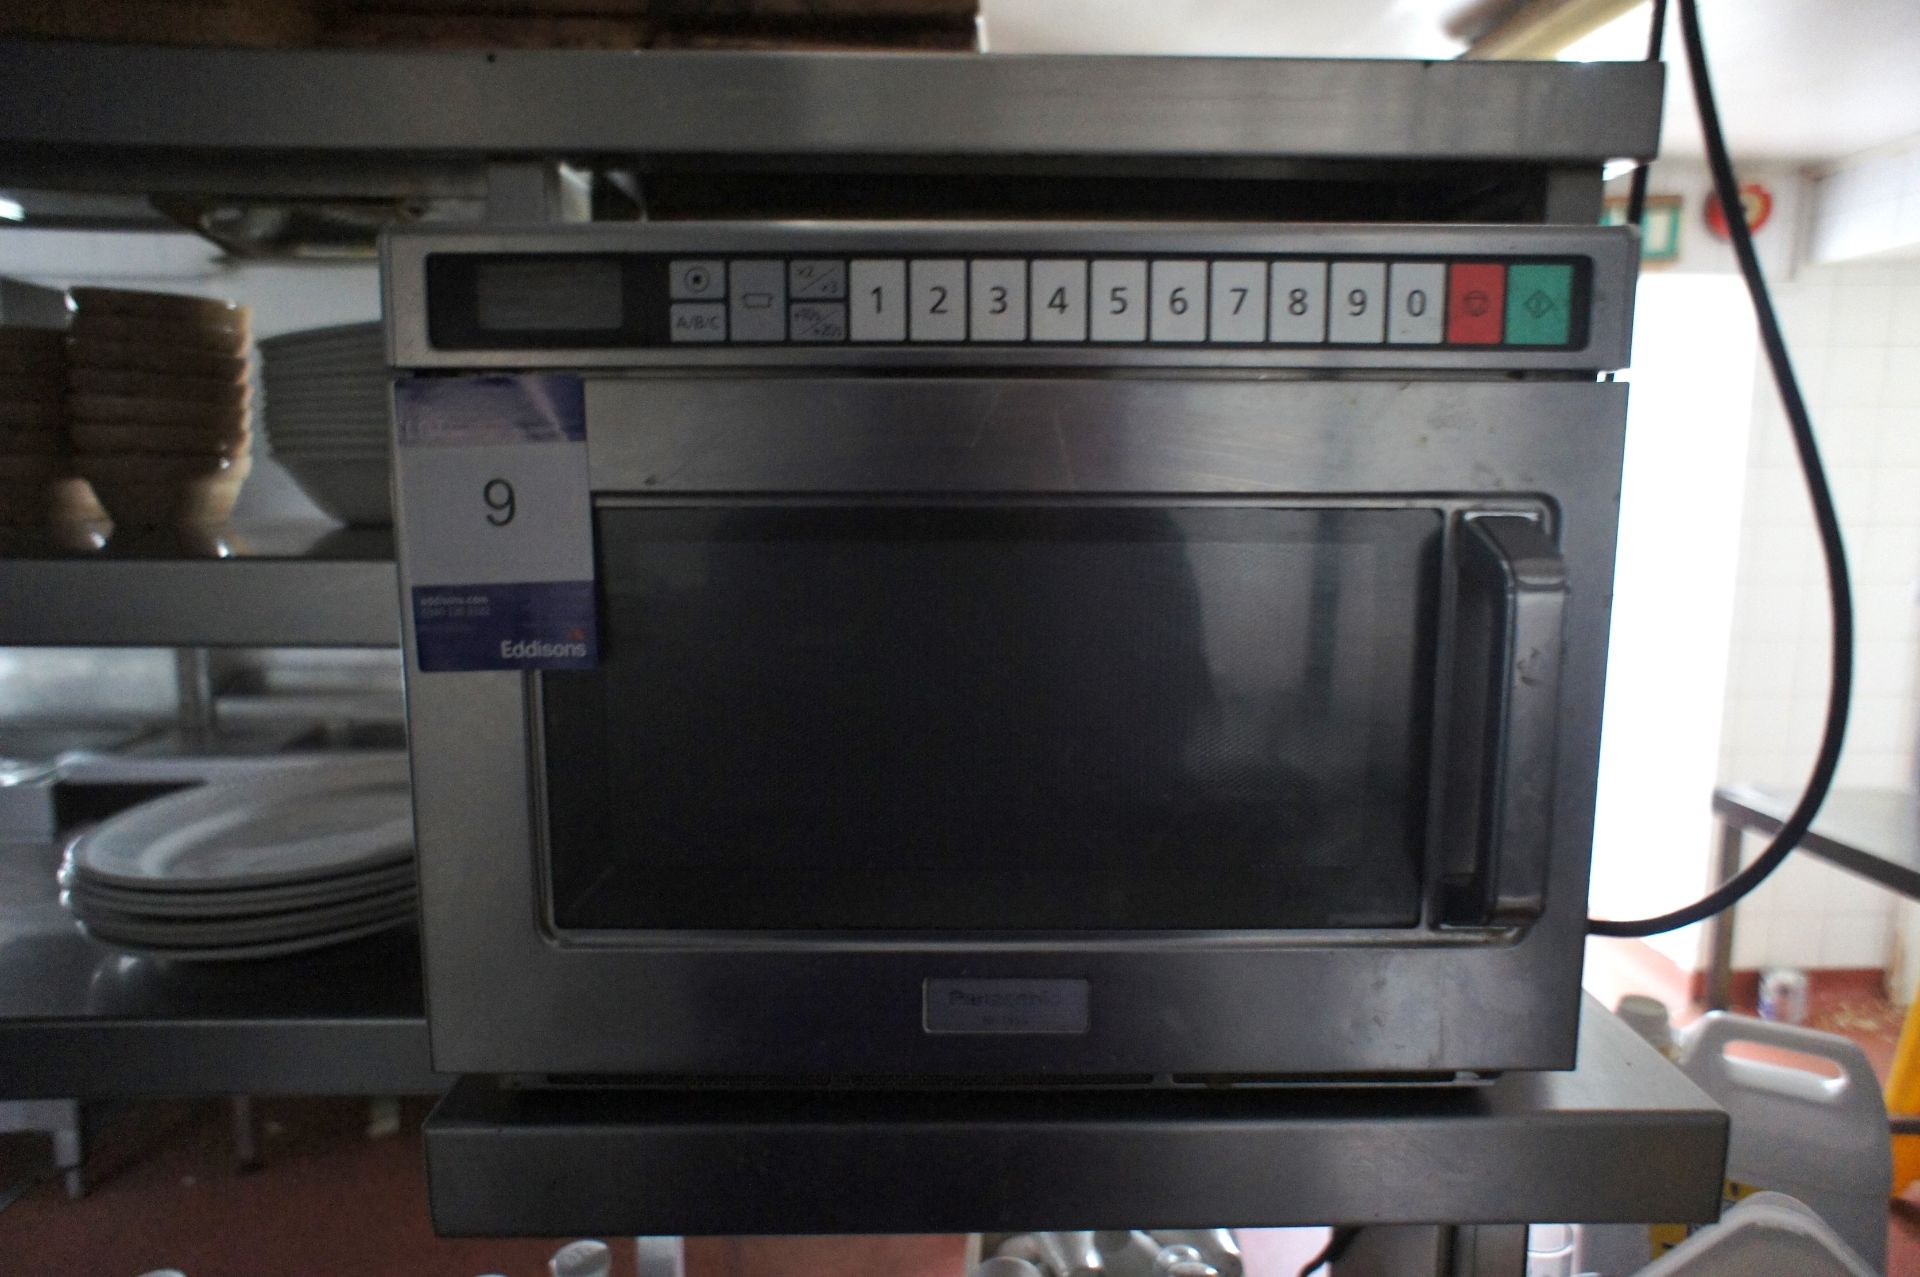 Panasonic NE-1853 commercial microwave - Image 2 of 2